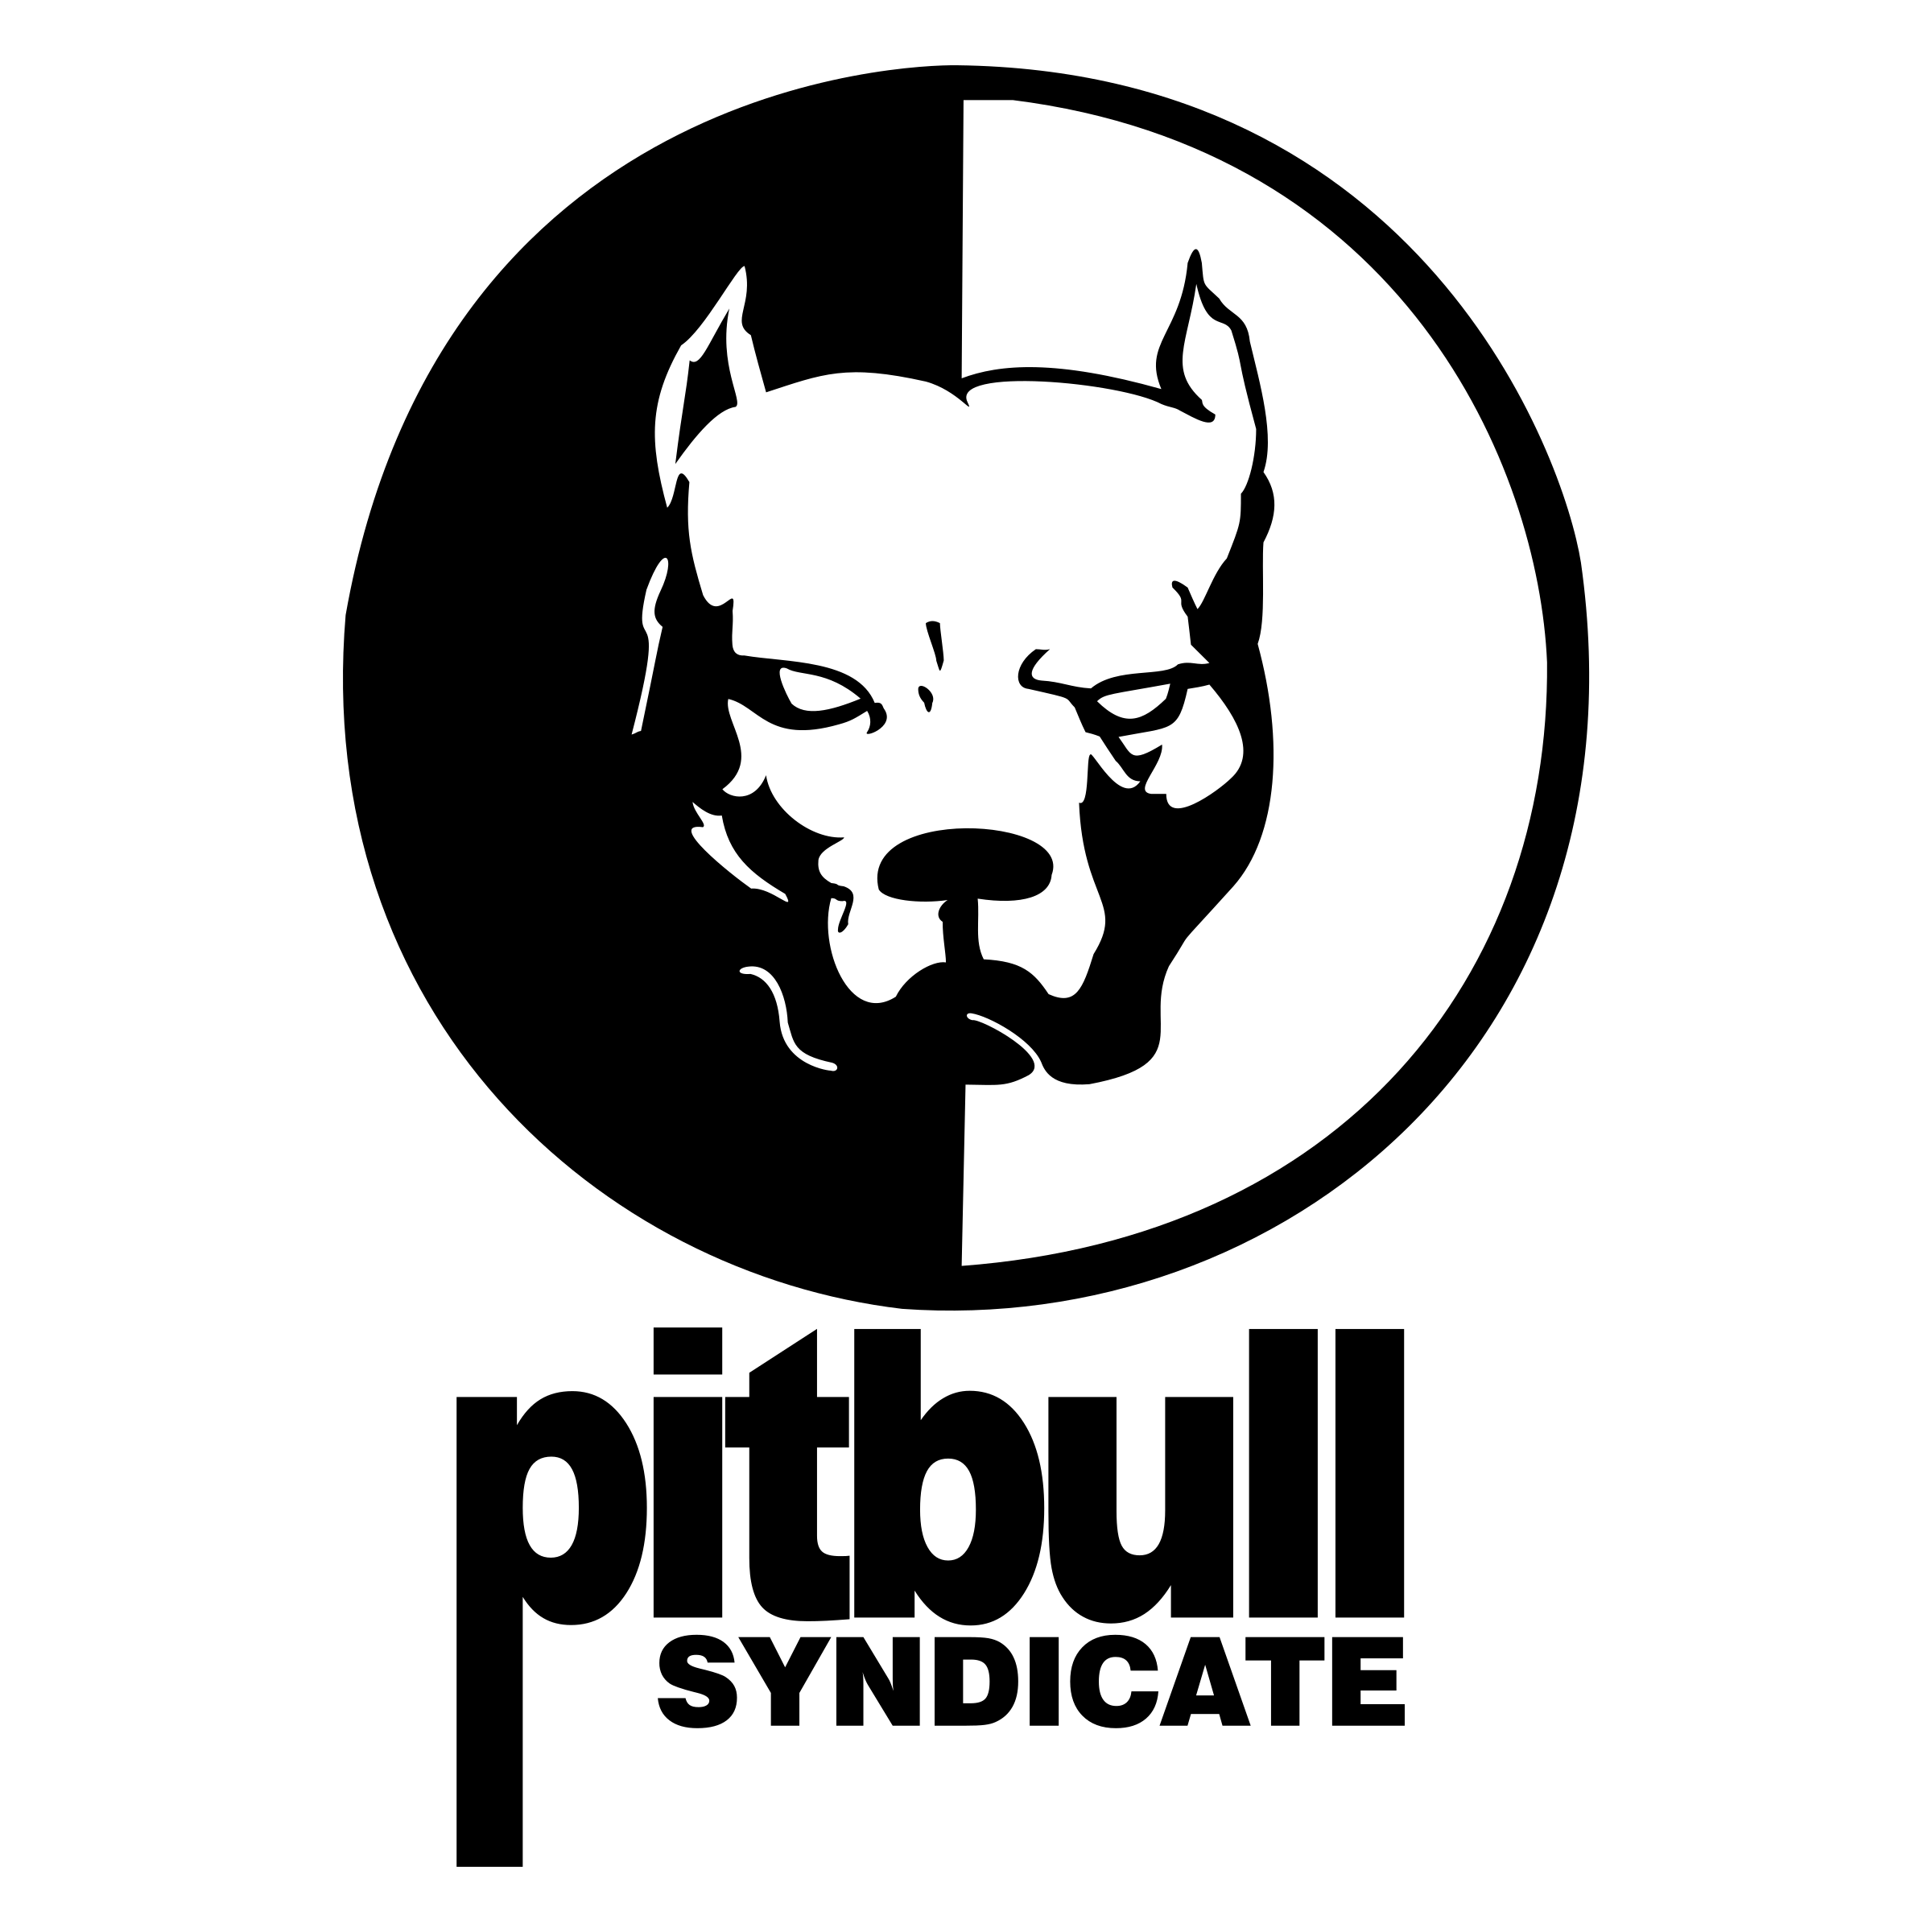 Pitbull Black and White Logo - Pitbull Syndicate Logo PNG Transparent & SVG Vector